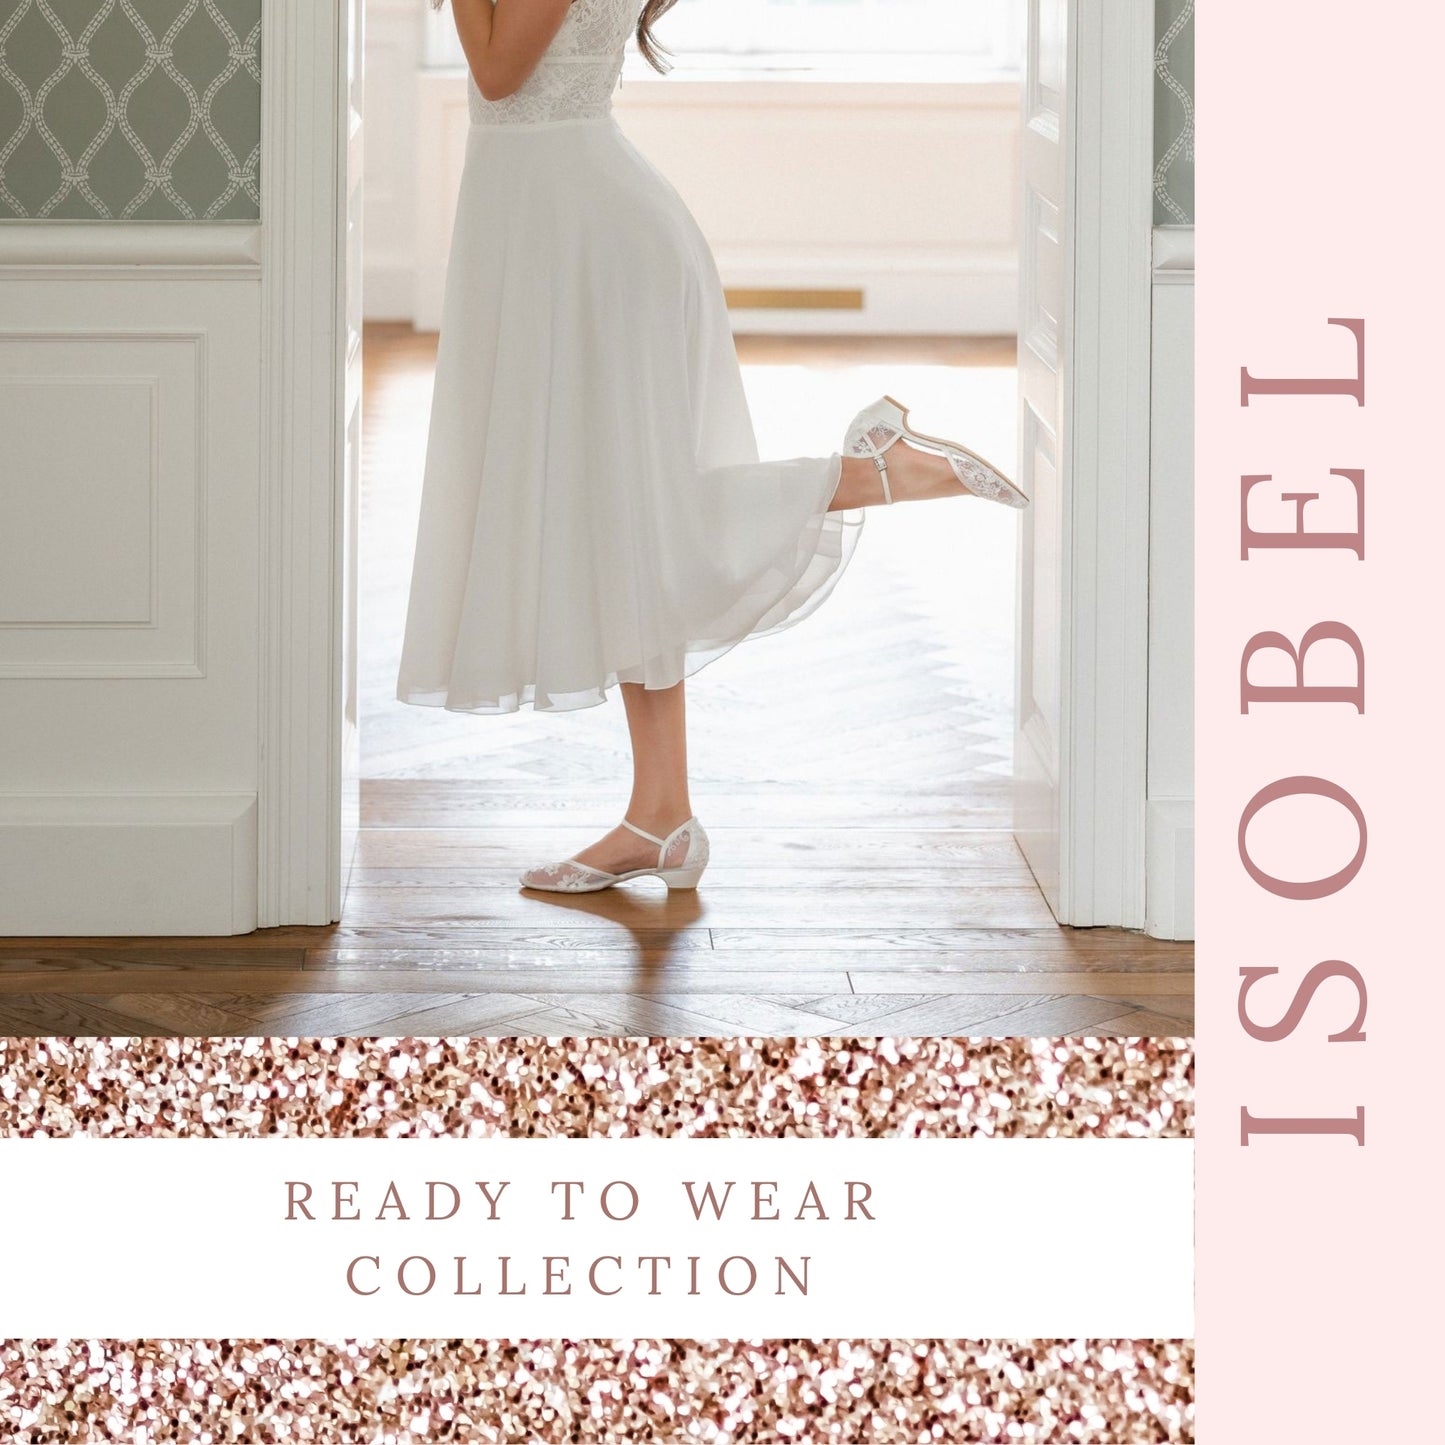 Floral Bridal Shoes | Most Comfortable Wedding Shoes For Bride